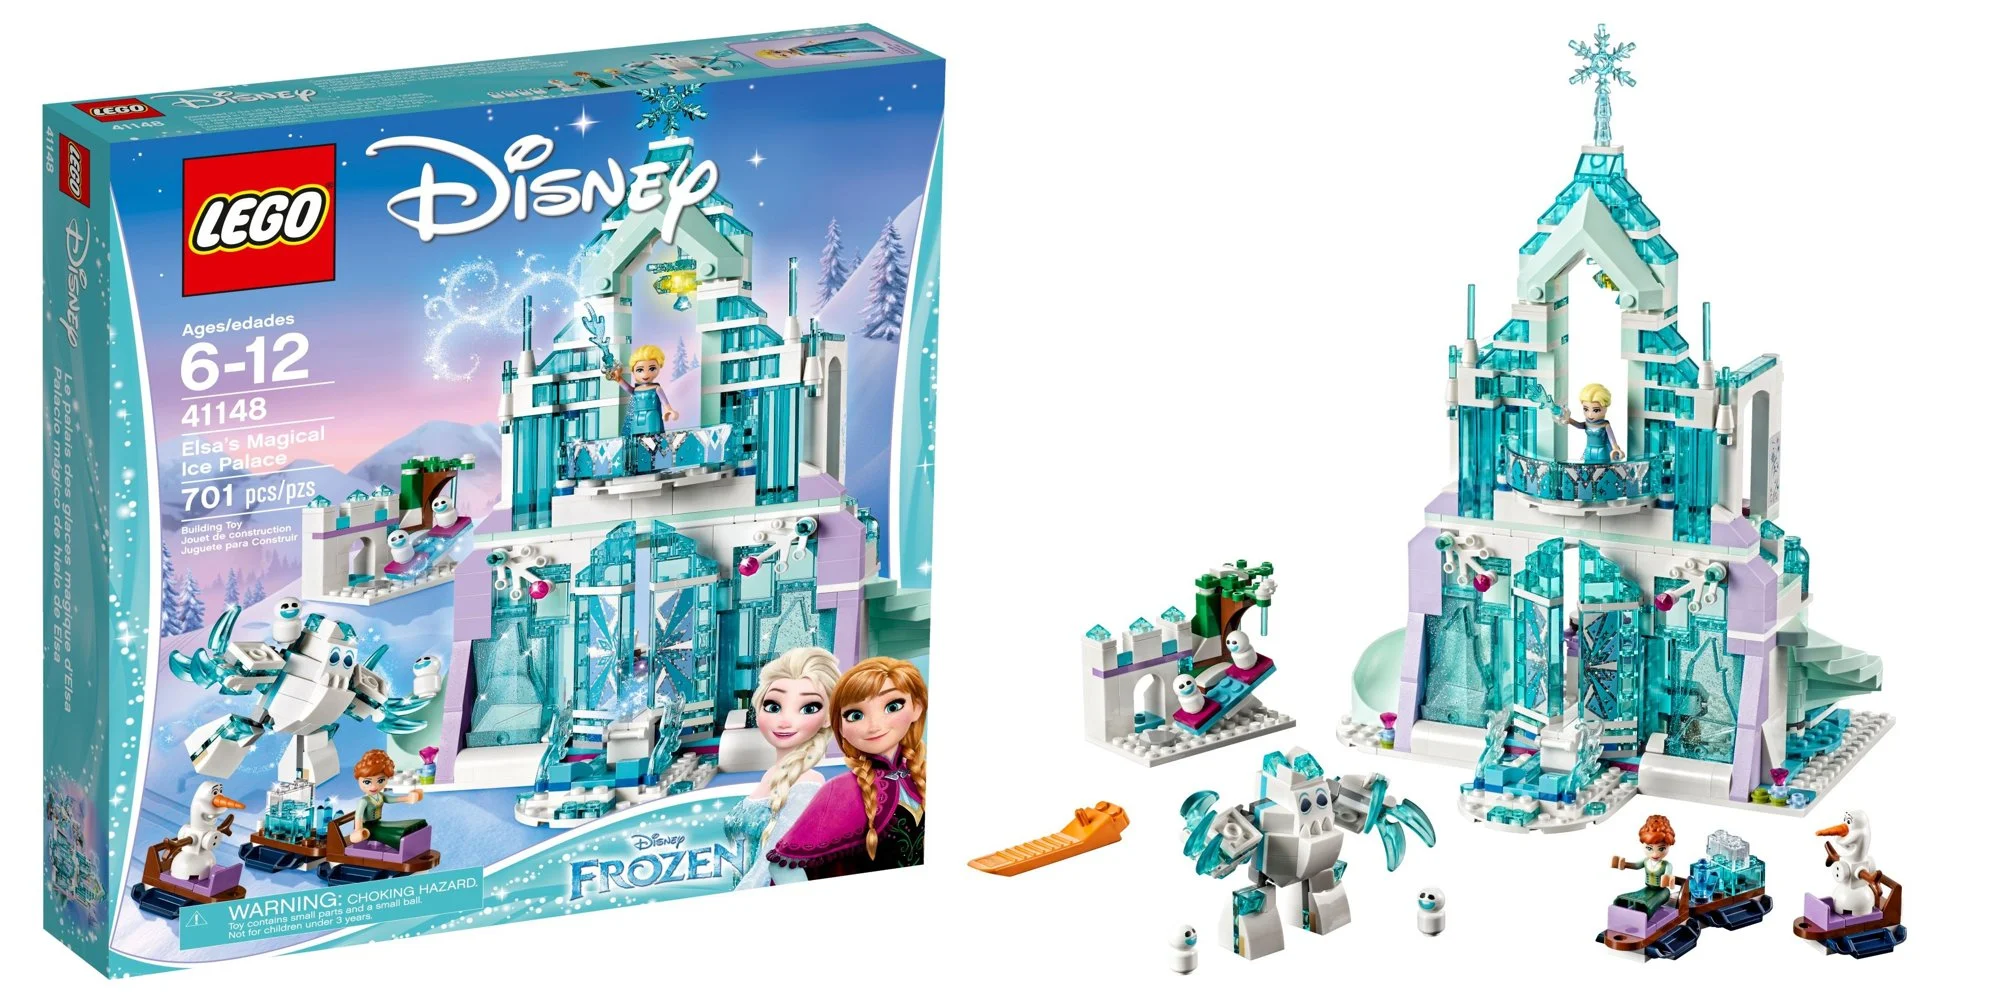 Best LEGO Disney sets - Elsa's Magical Ice Palace